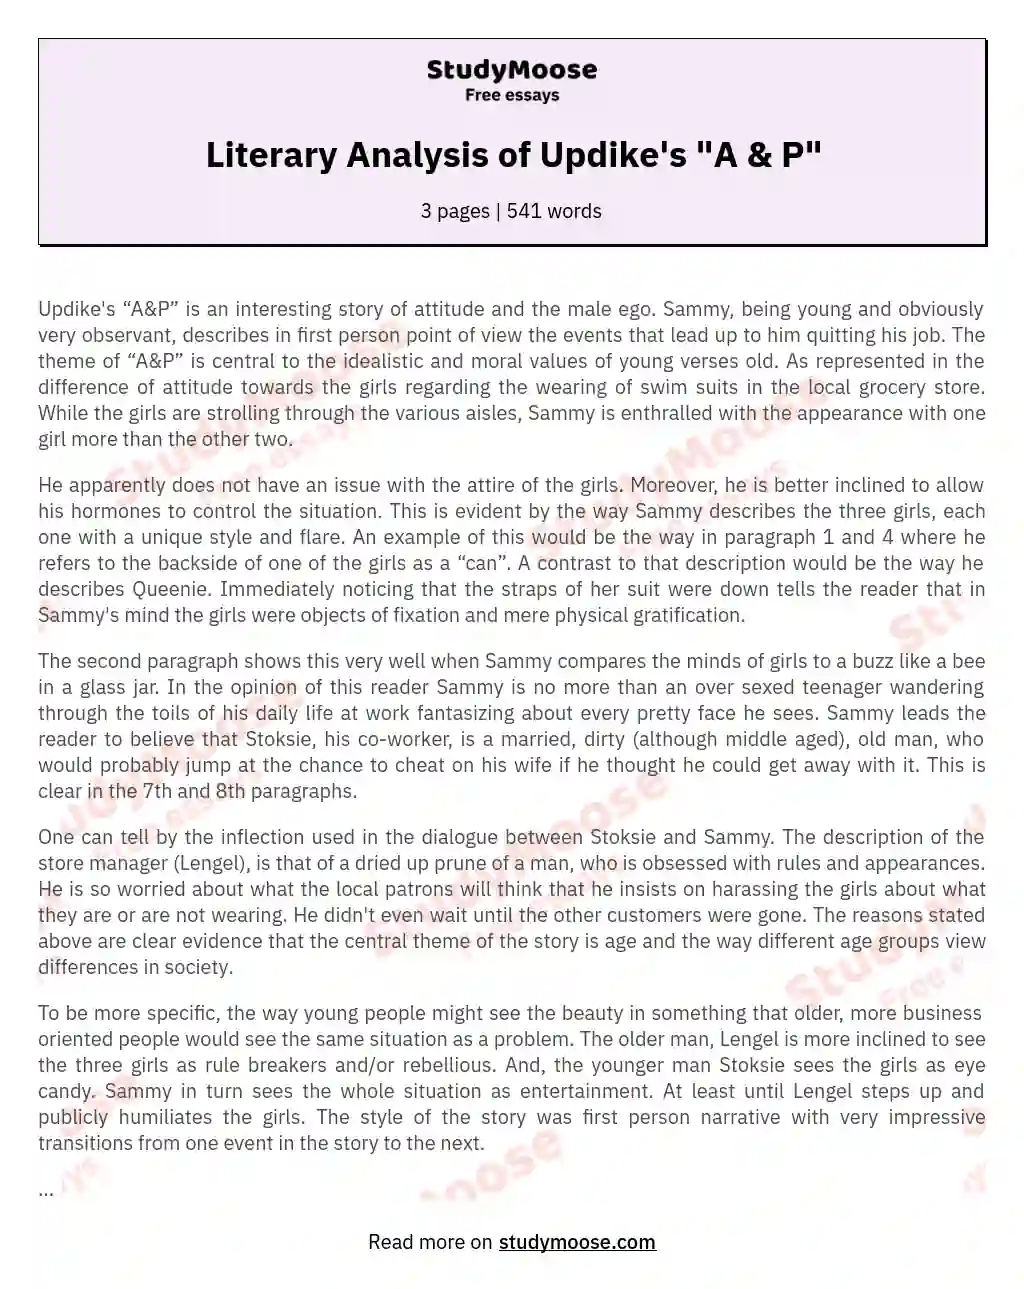 Literary Analysis of Updike's "A & P" essay